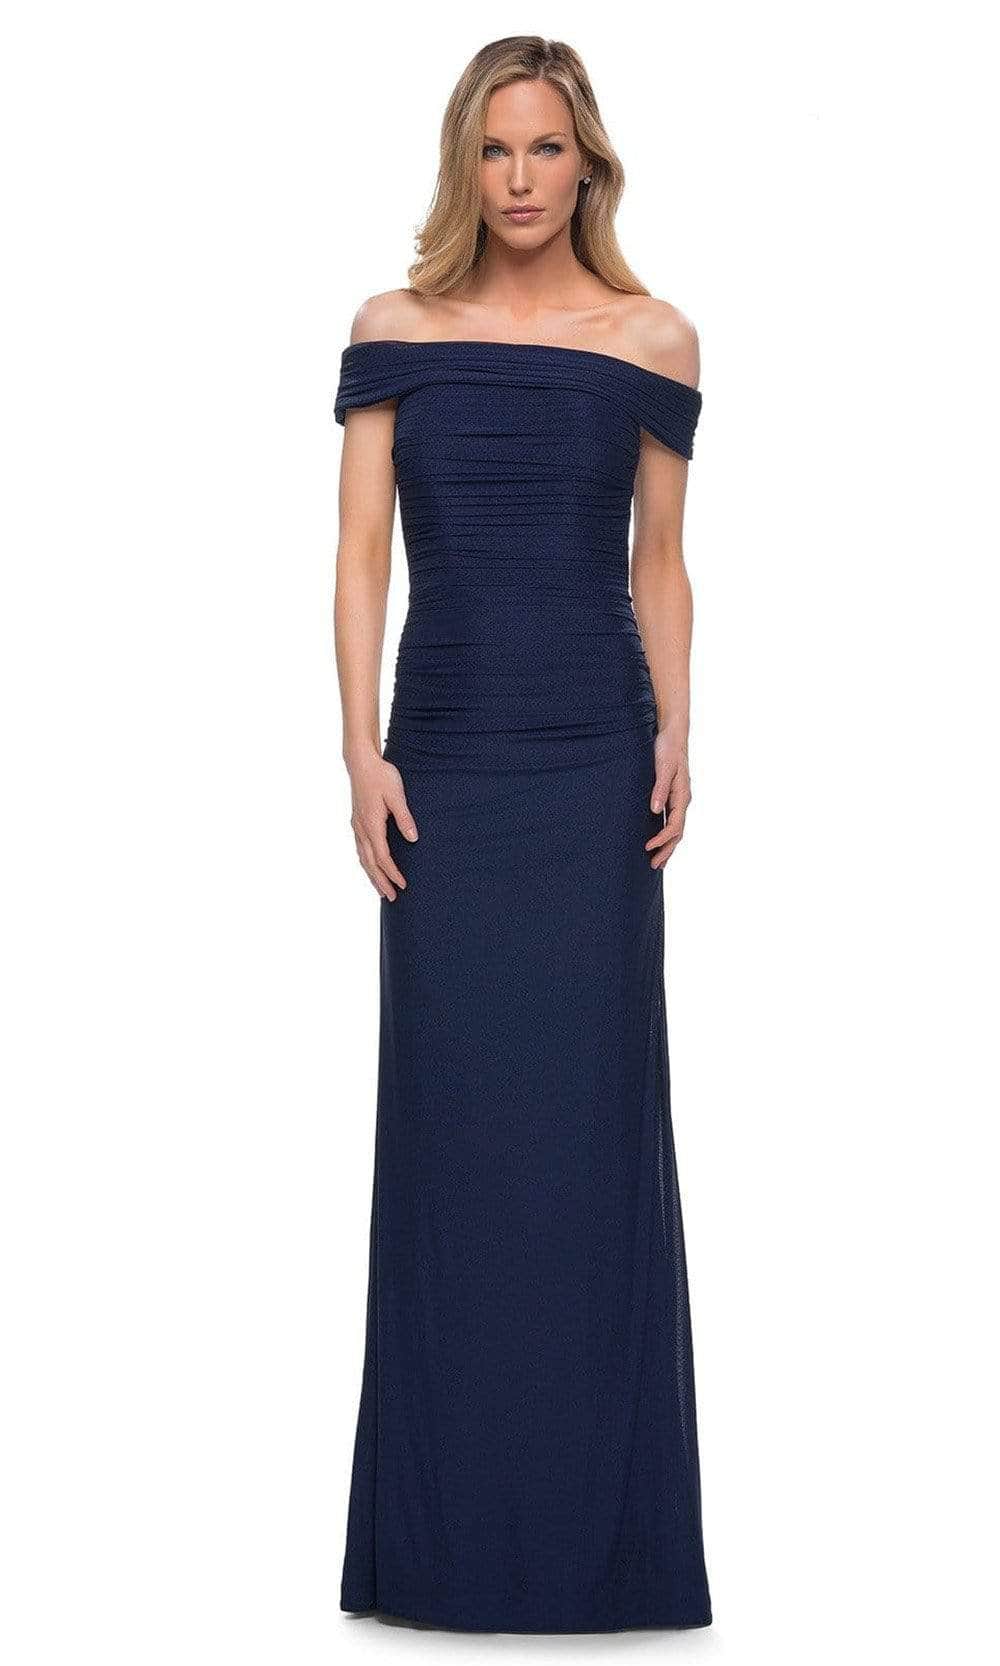 La Femme - Straight Across Jersey Formal Dress 29541SC - 1 pc Emerald In Size 4 Available CCSALE 4 / Emerald